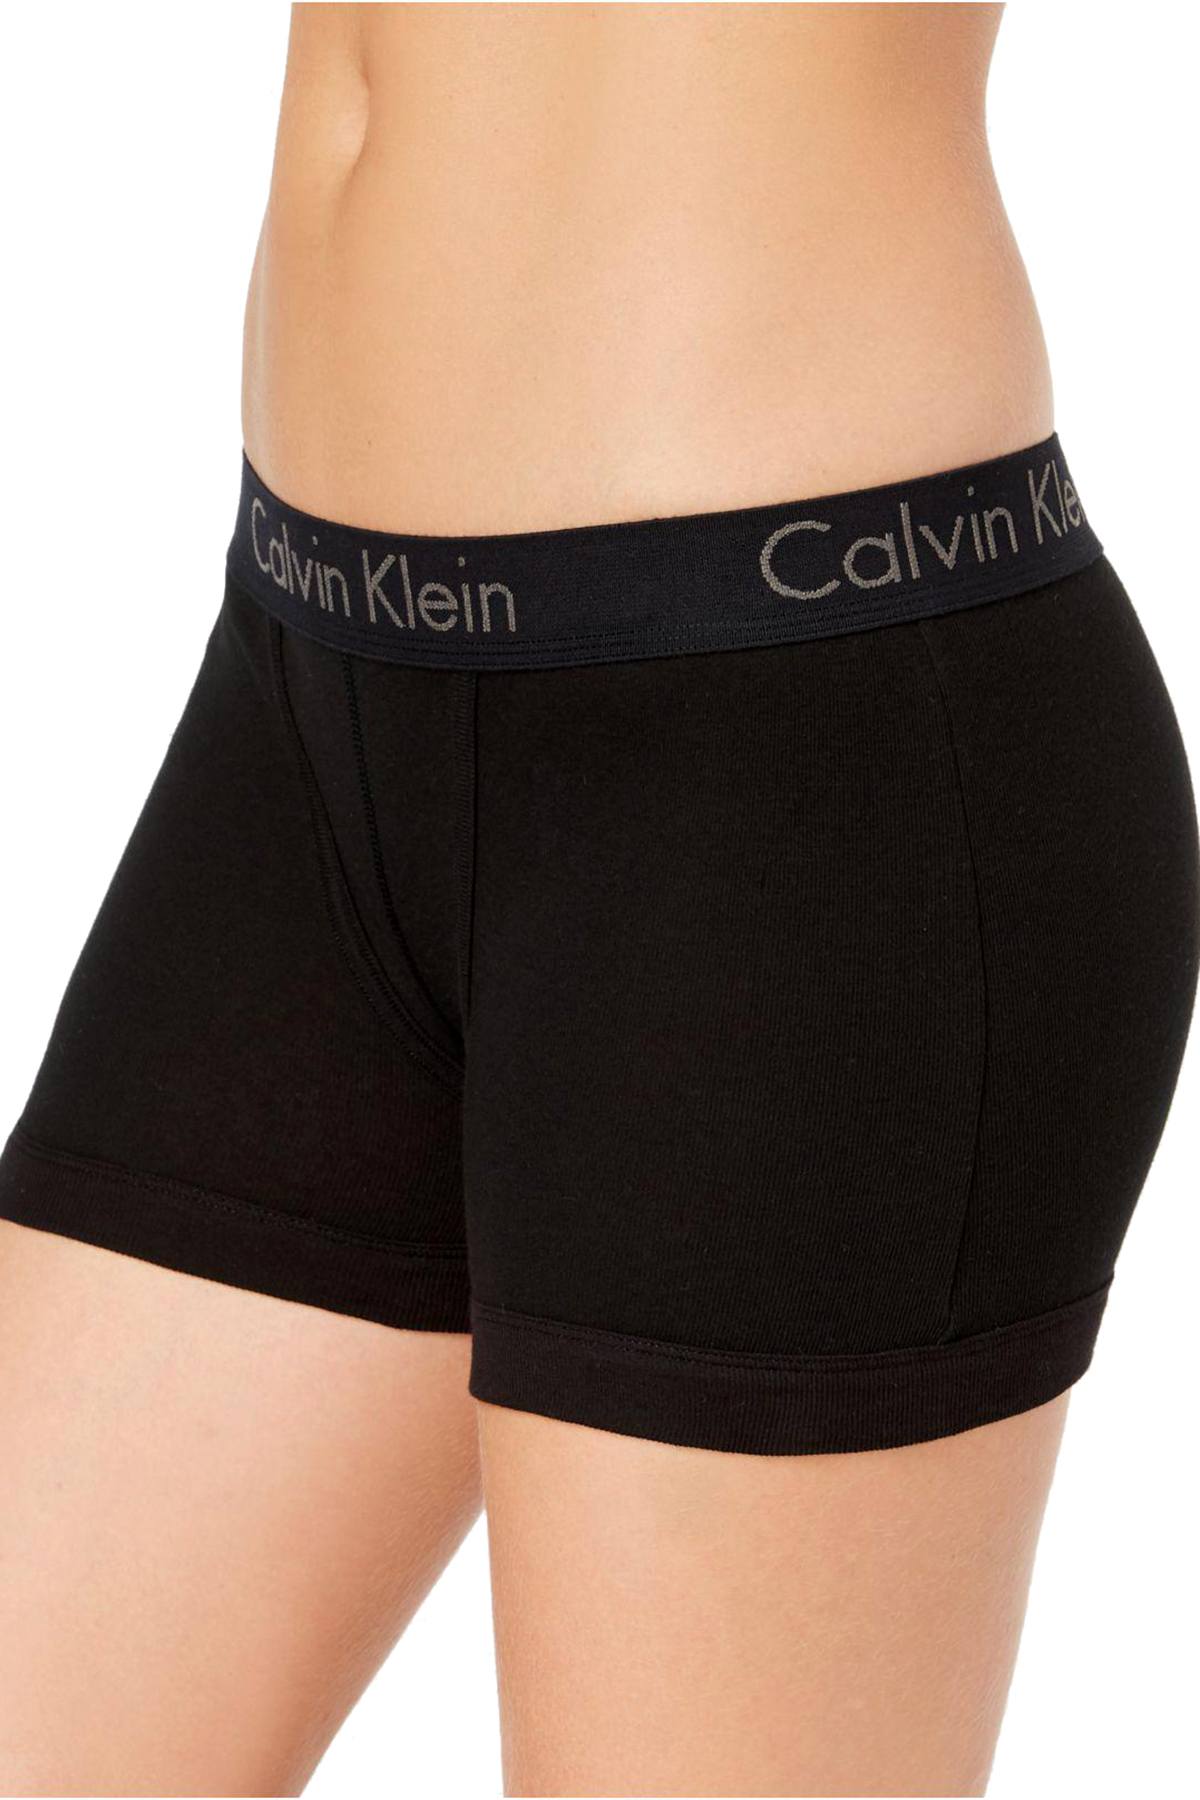 Calvin Klein Black Body Boyshort Panty